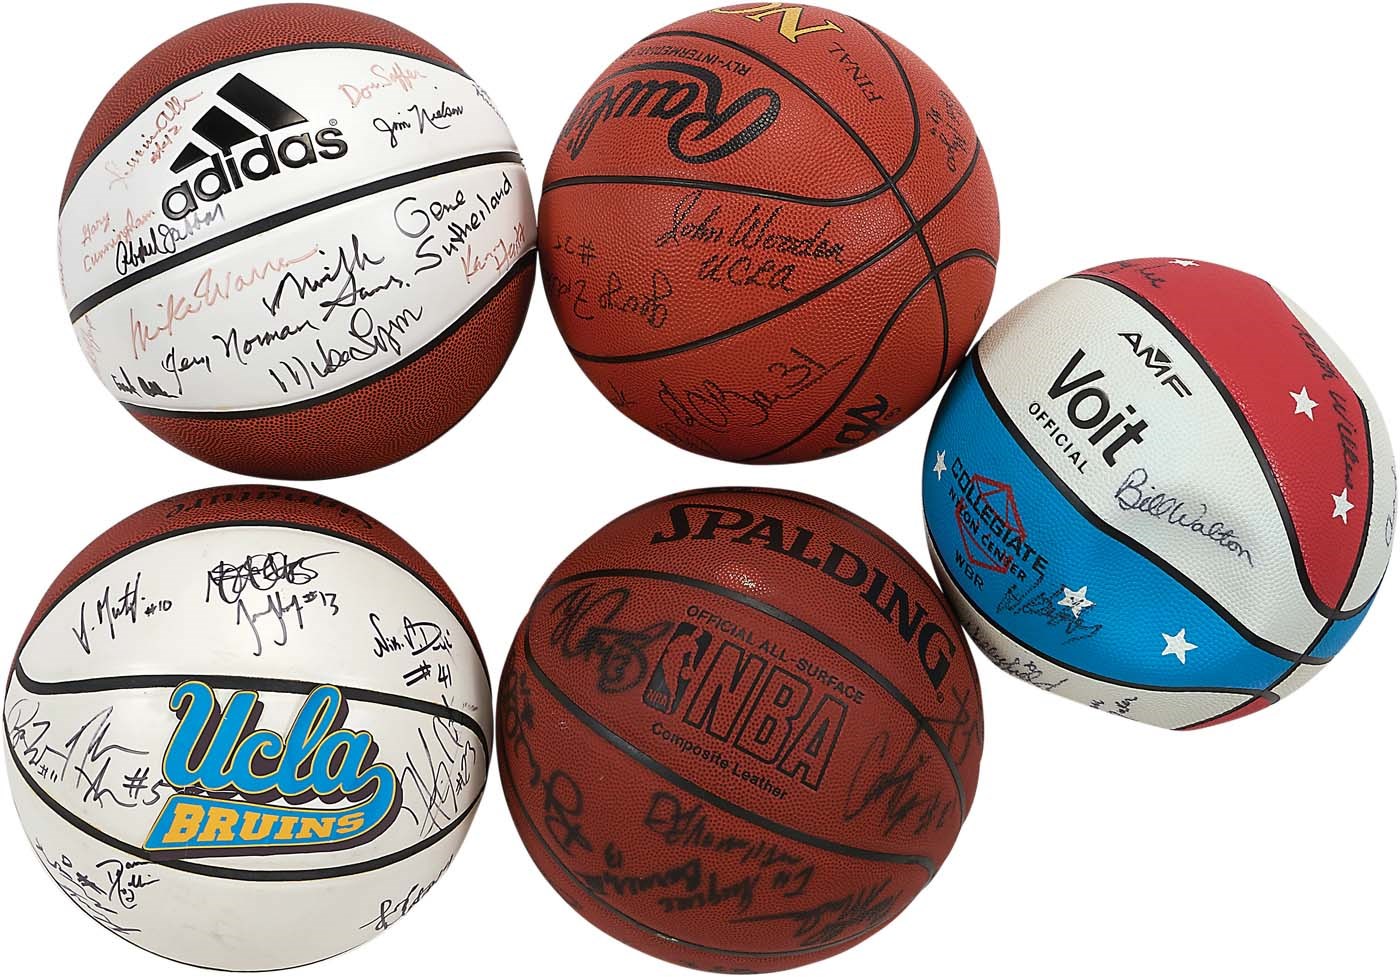 - UCLA Basketball Team-Signed Championship Basketballs (5) with Jabbar, Walton and Westbrook